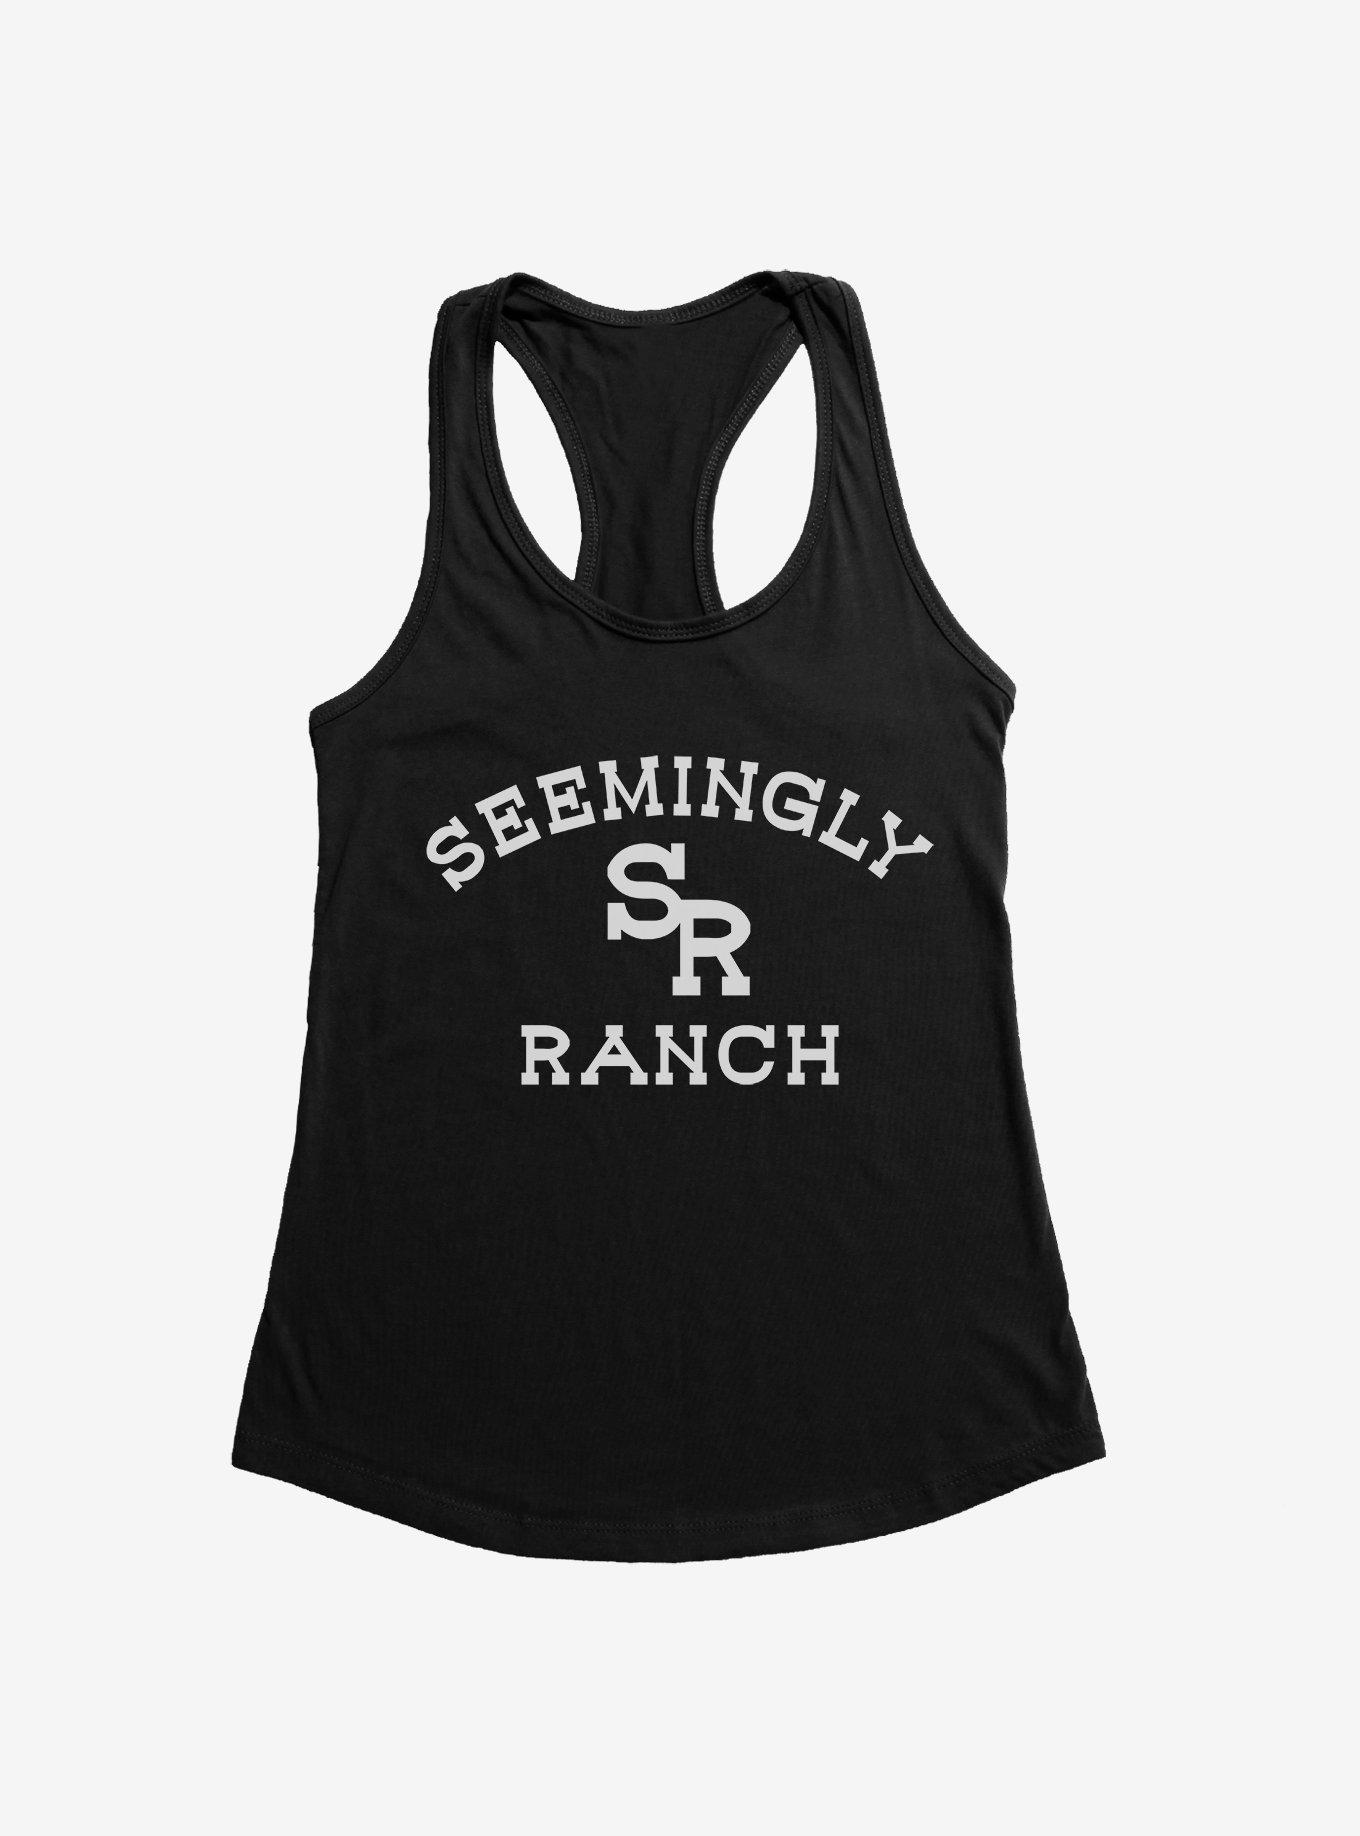 Hot Topic Seemingly Ranch Sign Girls Tank